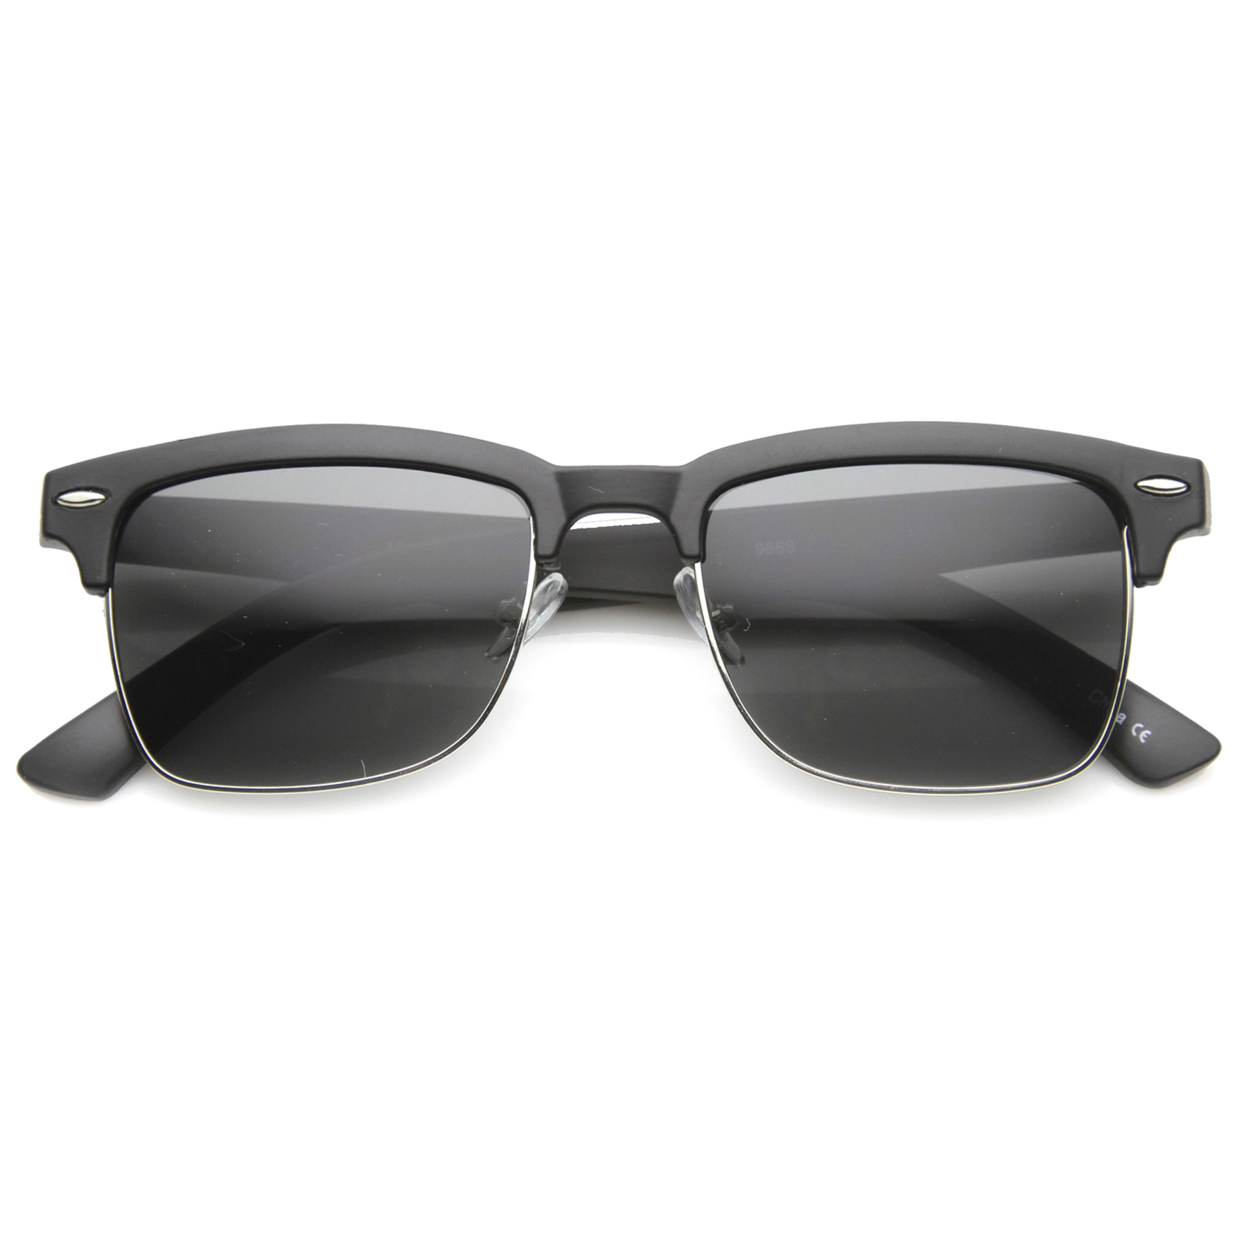 Classic Dapper Rectangular Half-Frame Horn Rimmed Sunglasses 9809 - Shiny Black-Gold / Green